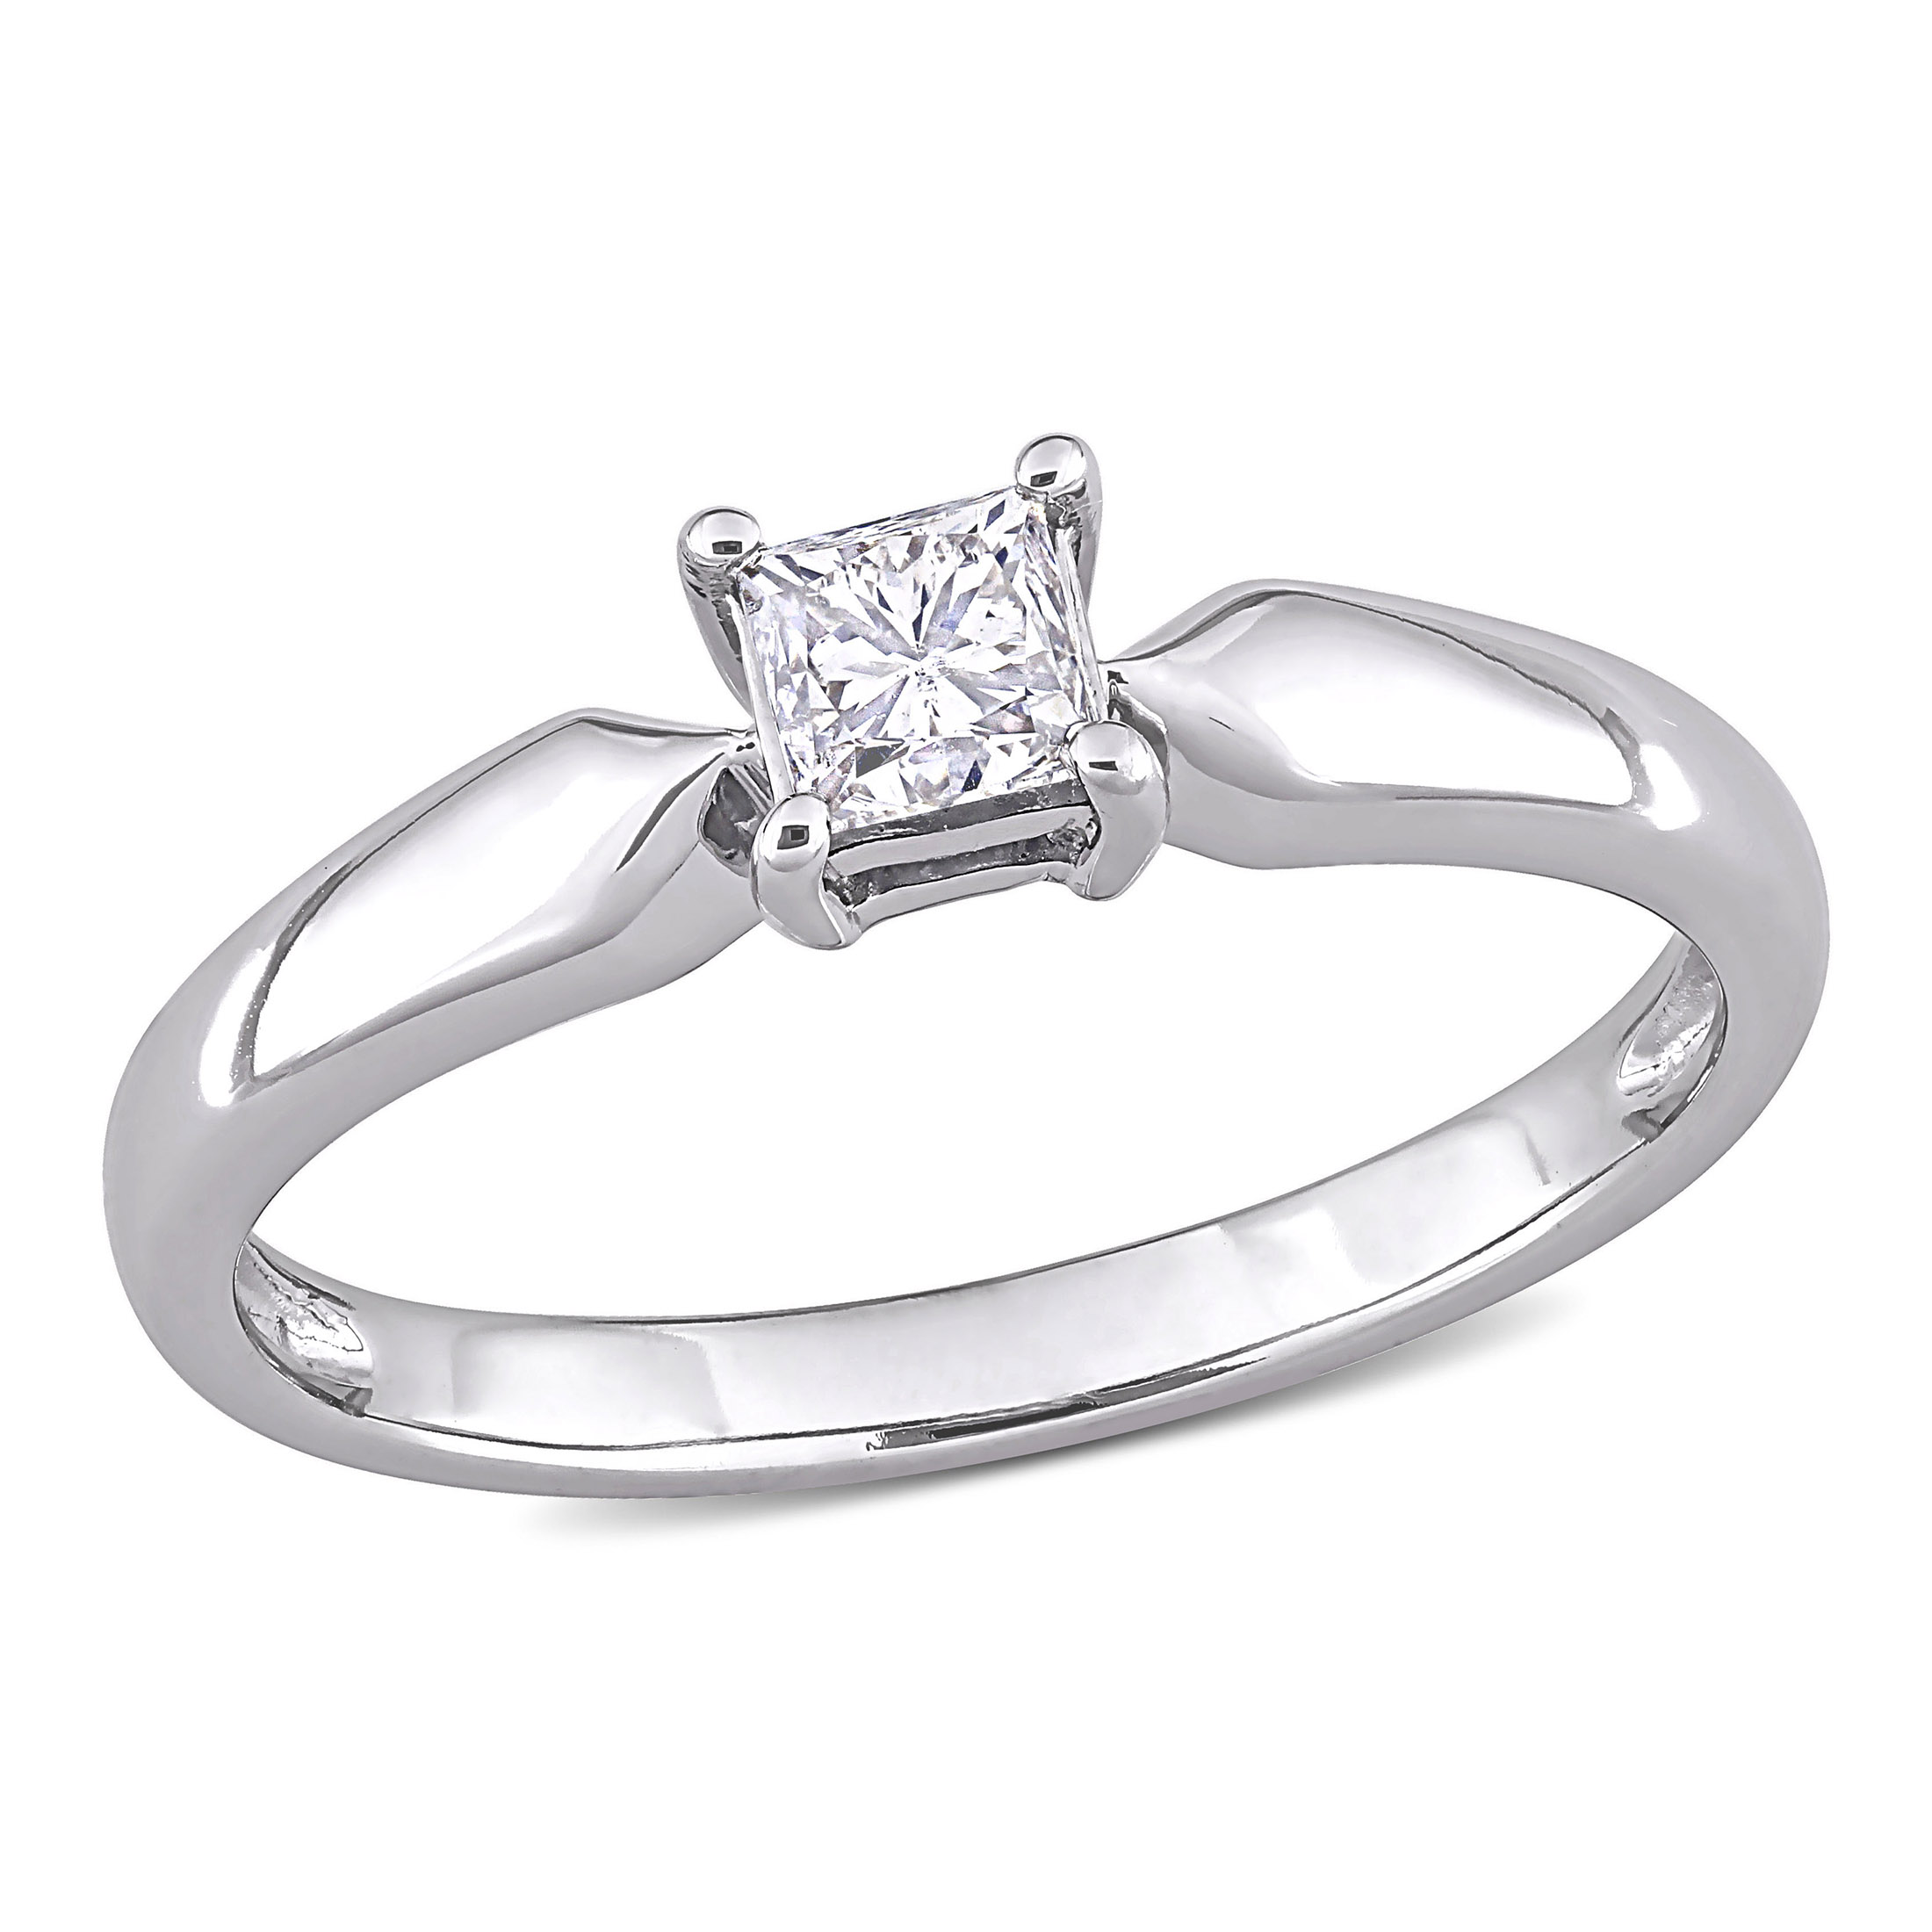 Miabella Women's 1/3 Carat T.W. Princess-Cut Diamond 10kt White Gold Solitaire Engagement Ring - image 1 of 7